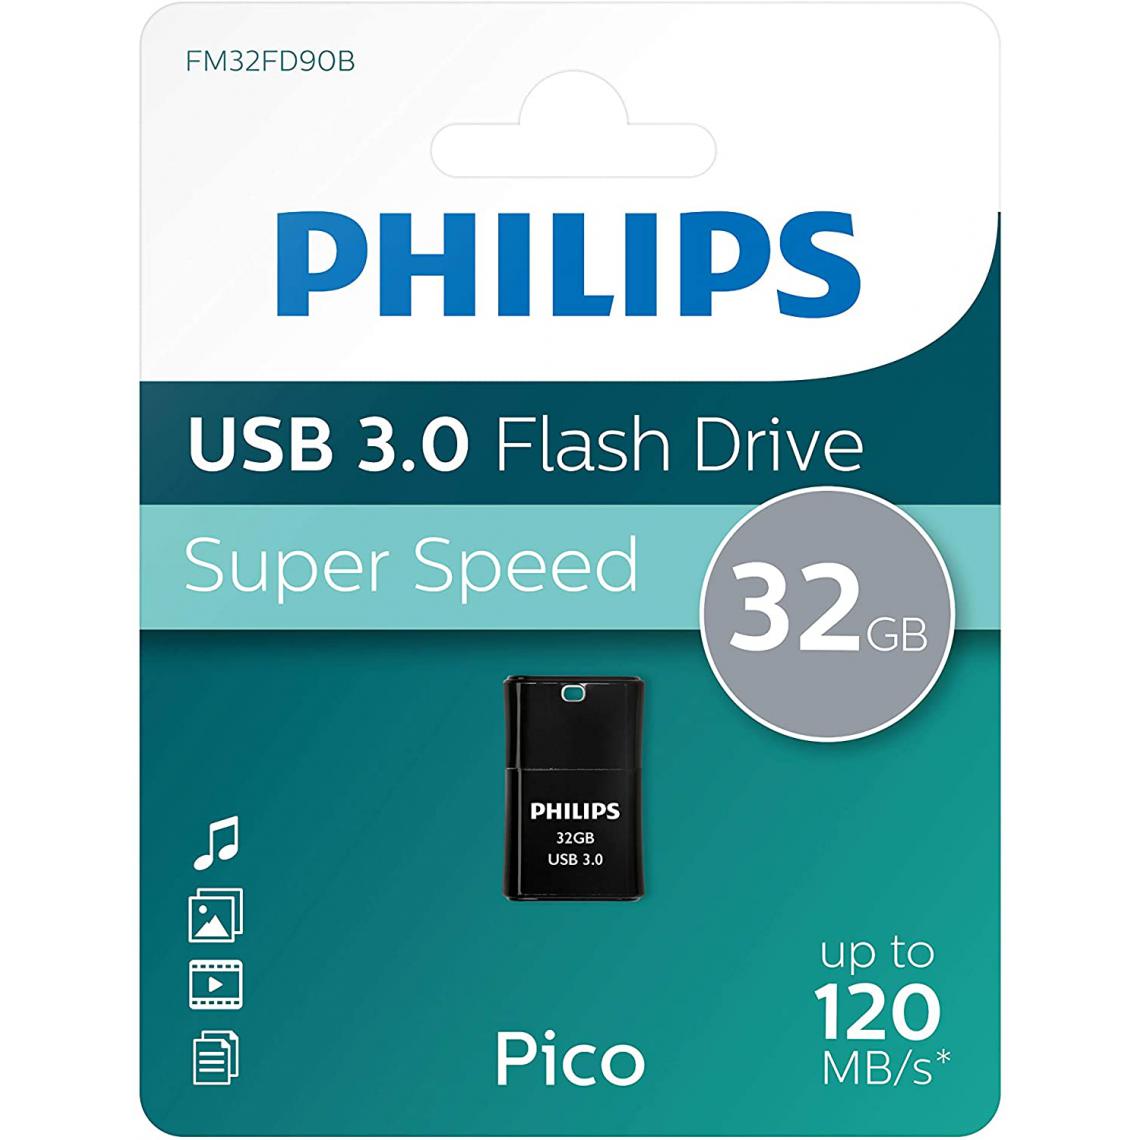 Philips - Philips USB 3.0 32GB Pico Edition noir - Disque Dur interne